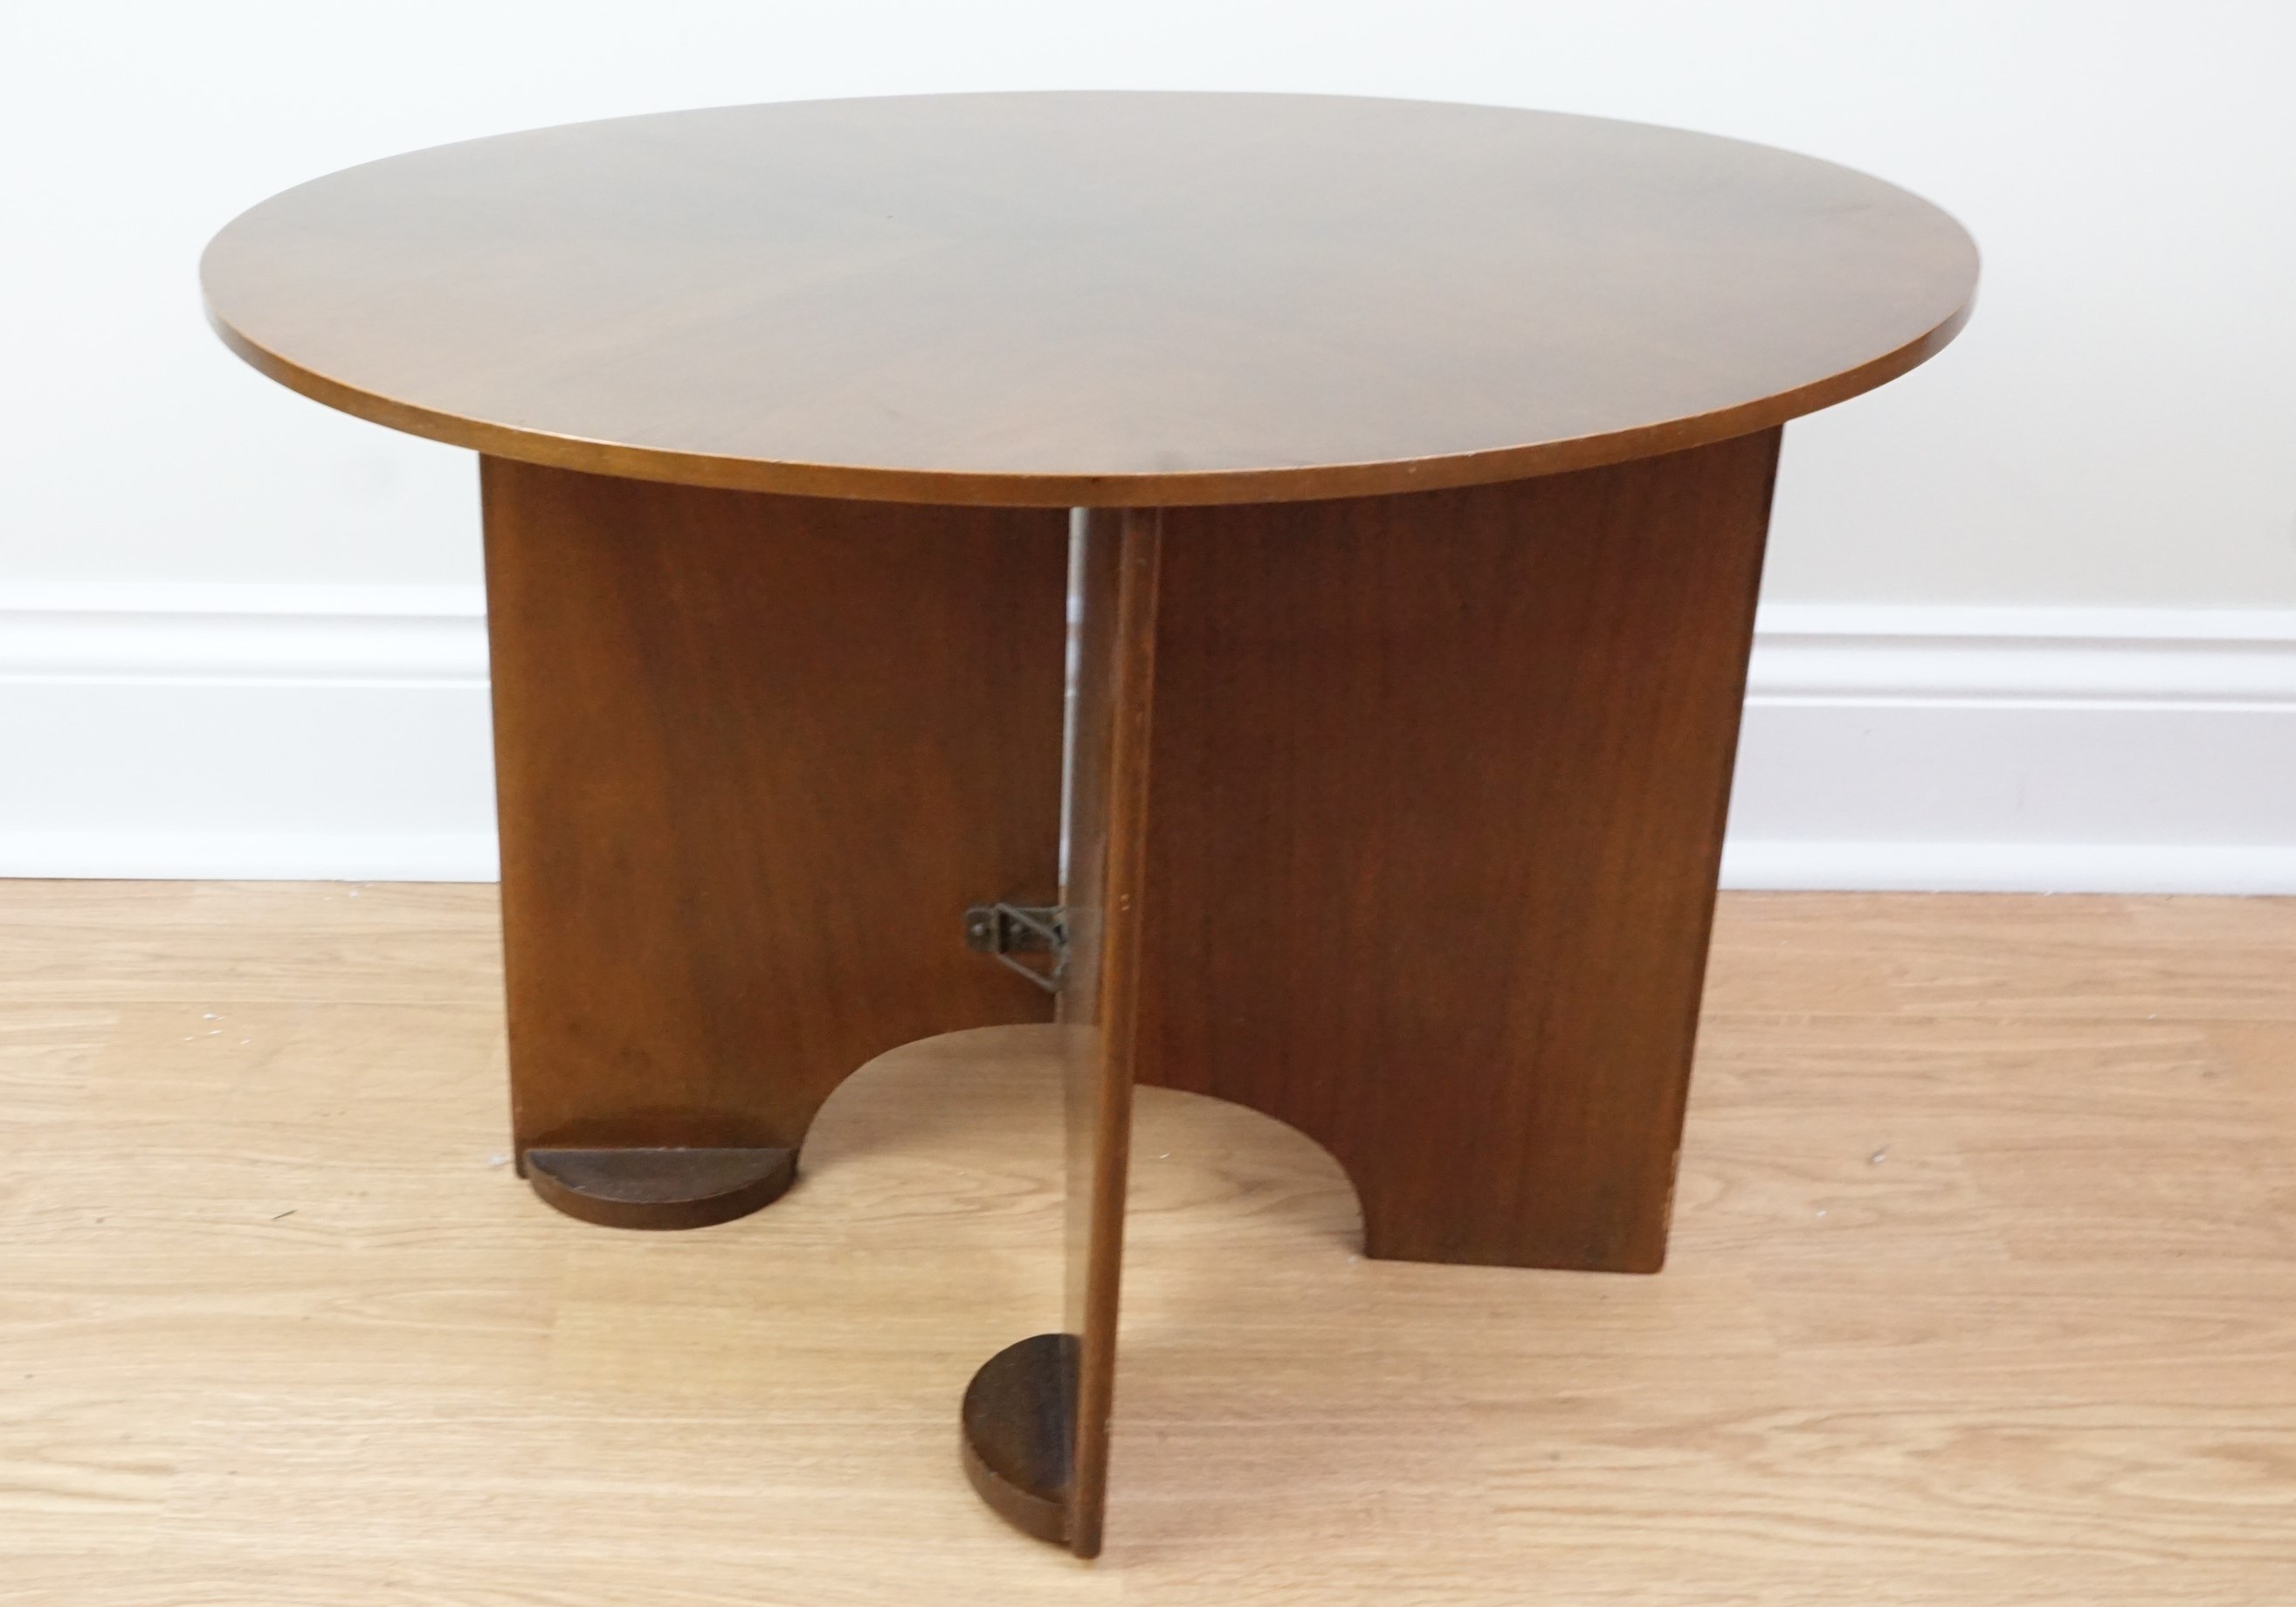 A 1930s Art Deco quarter-veneered walnut occasional table cum screen, 51 cm x 66 cm x 42 cm high